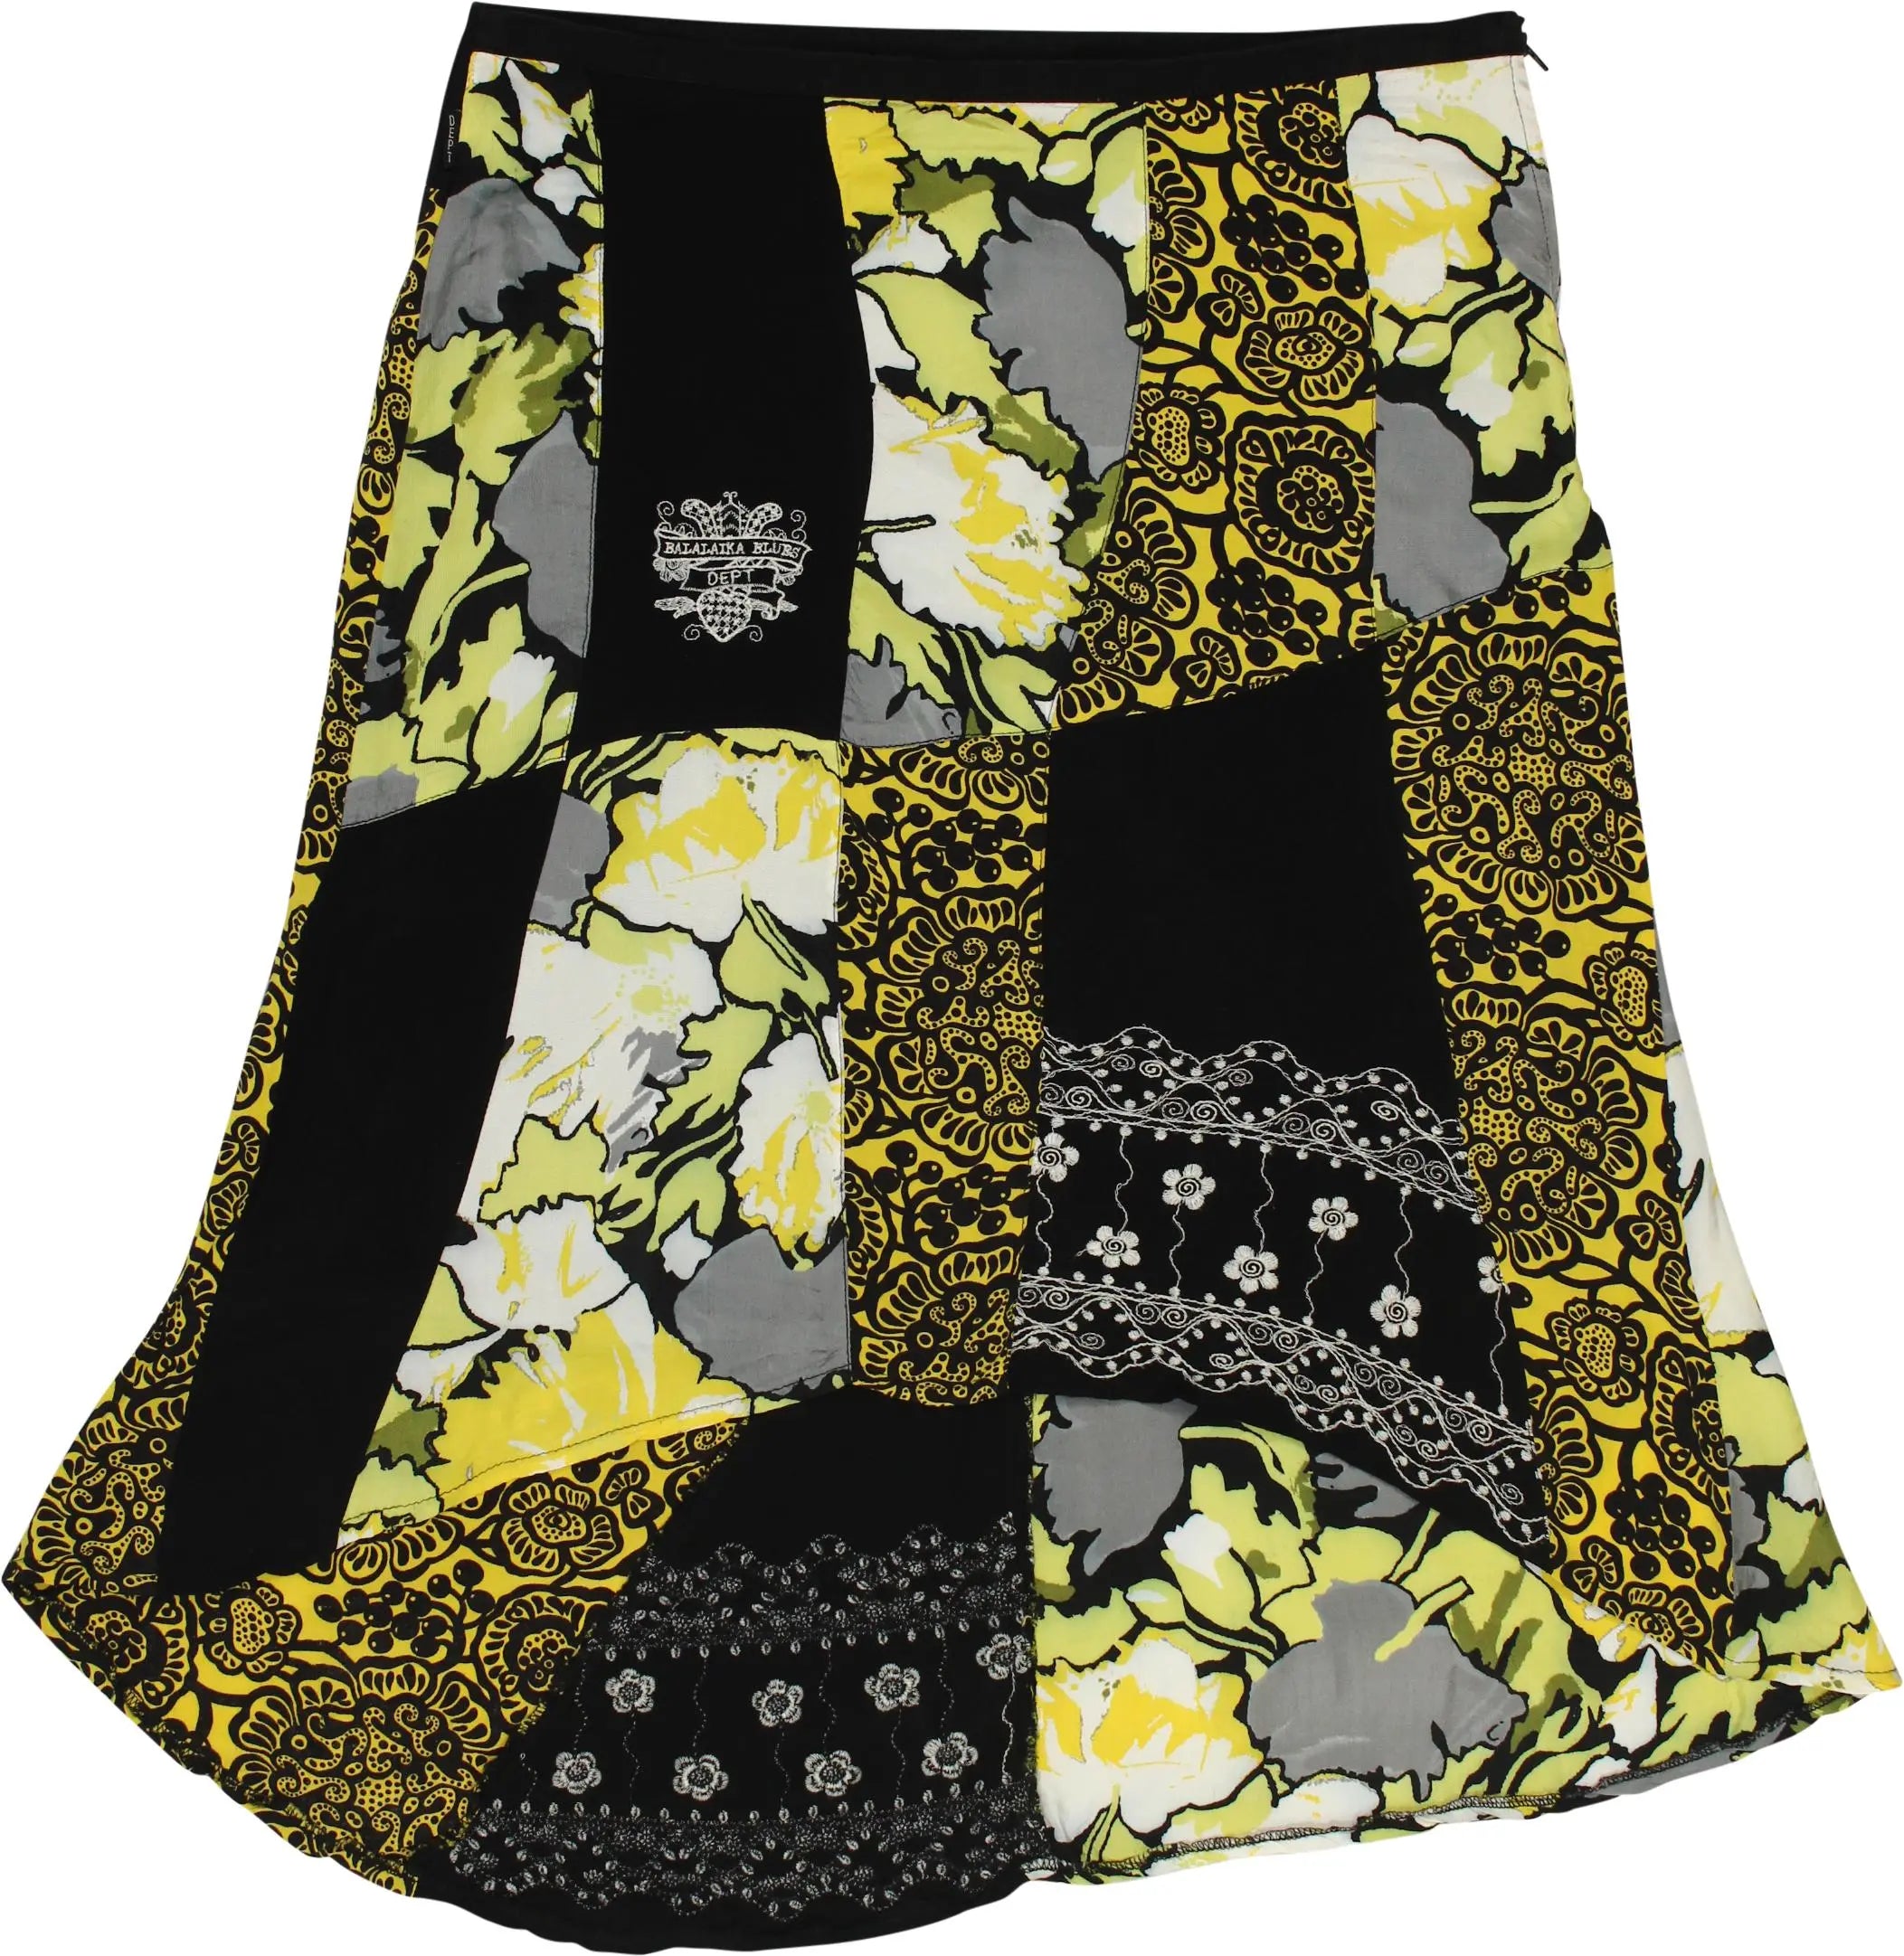 Dept - Patterned Skirt- ThriftTale.com - Vintage and second handclothing